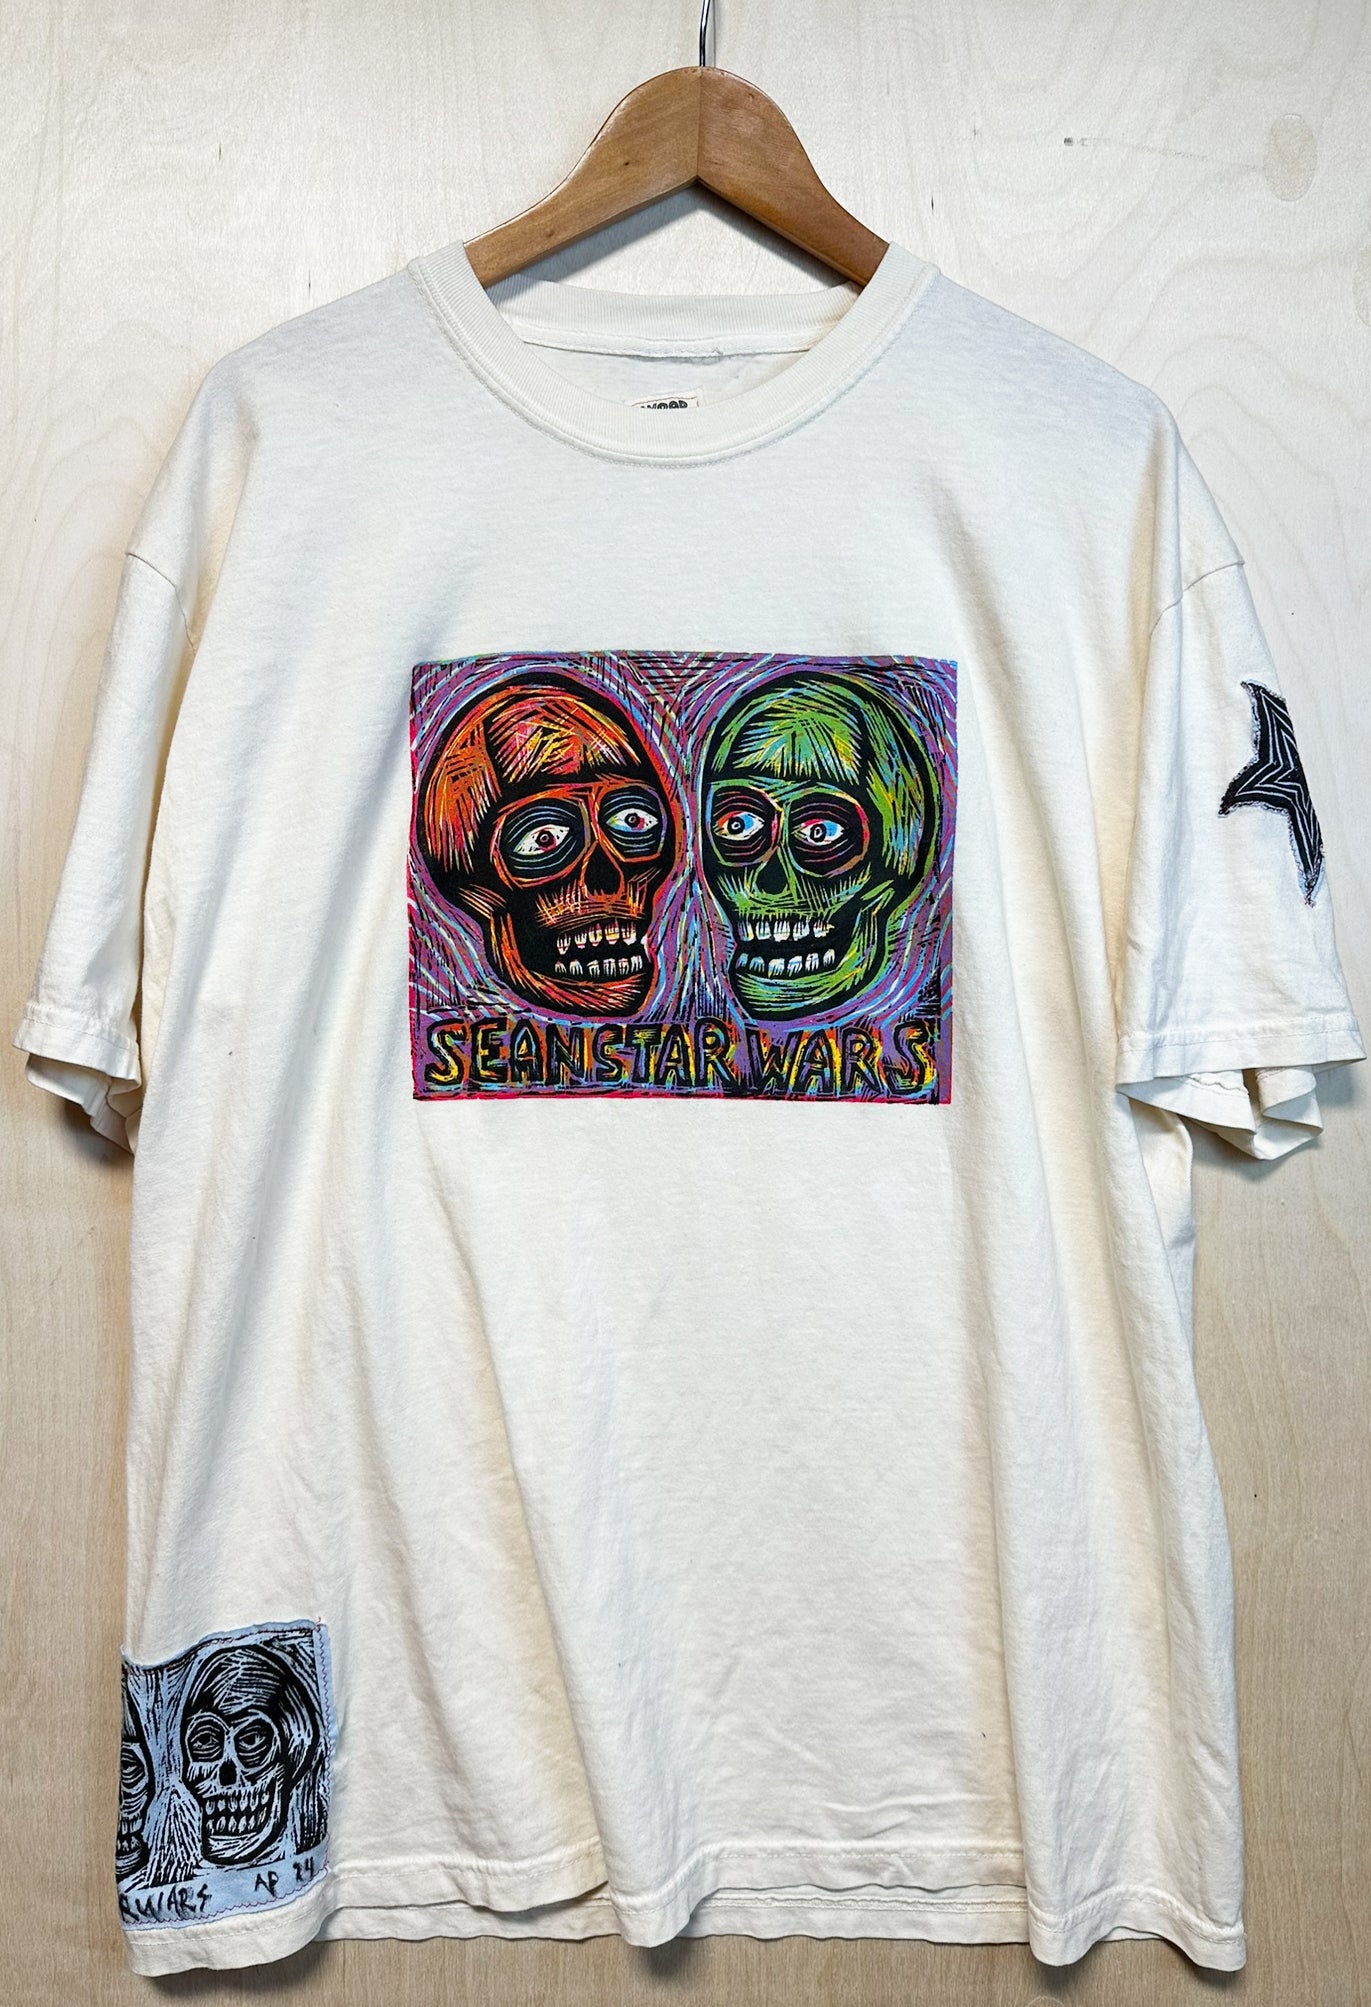 Twin Skulls Tshirt  Limited Edition Shirt  (Limited to 50 shirts)